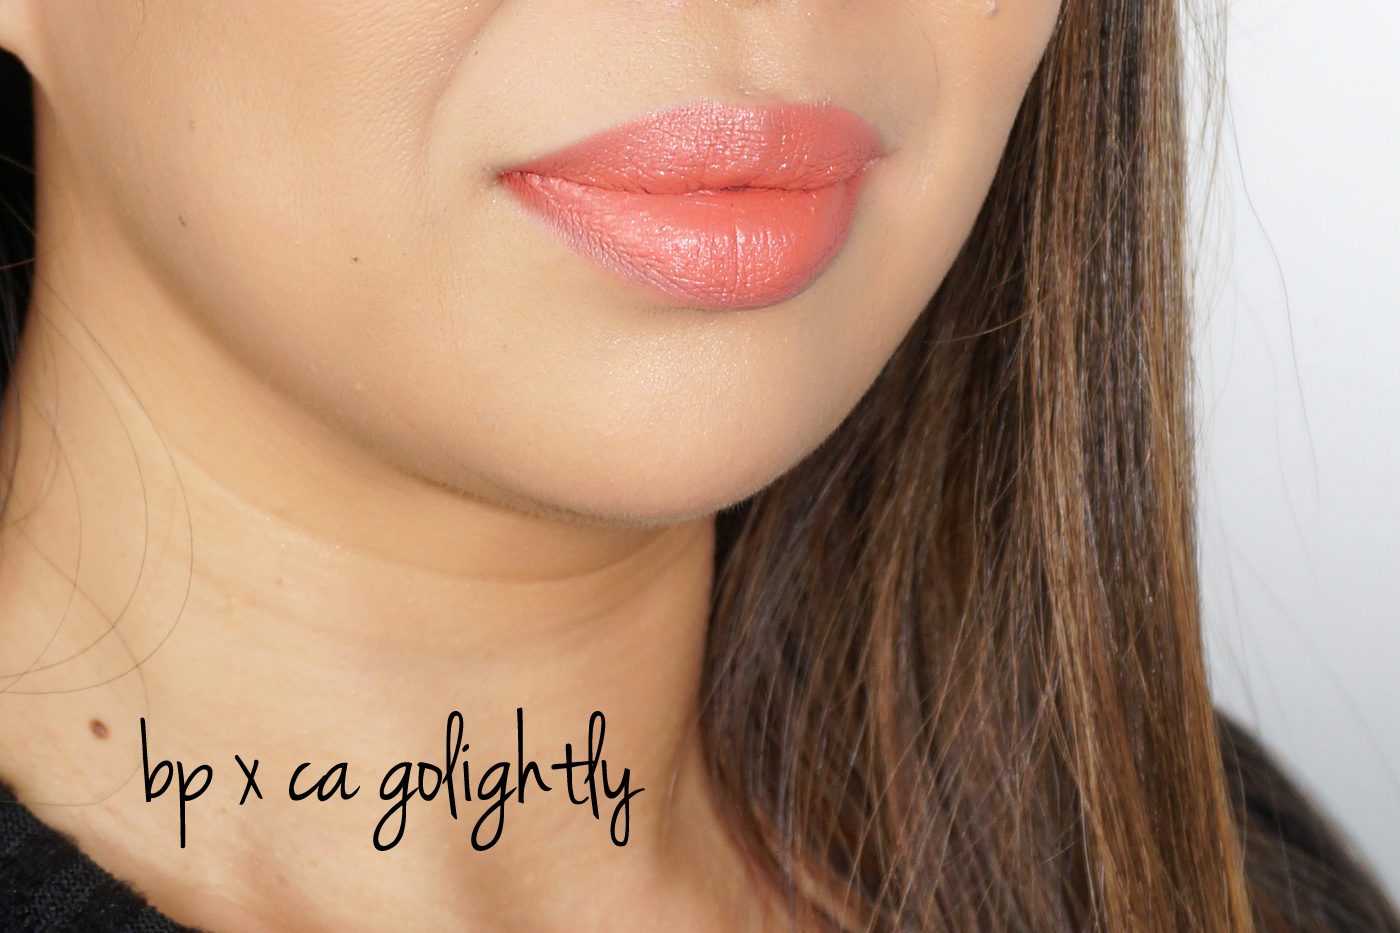 Christian Audette x Beauty Professor Lipstick in Golightly review